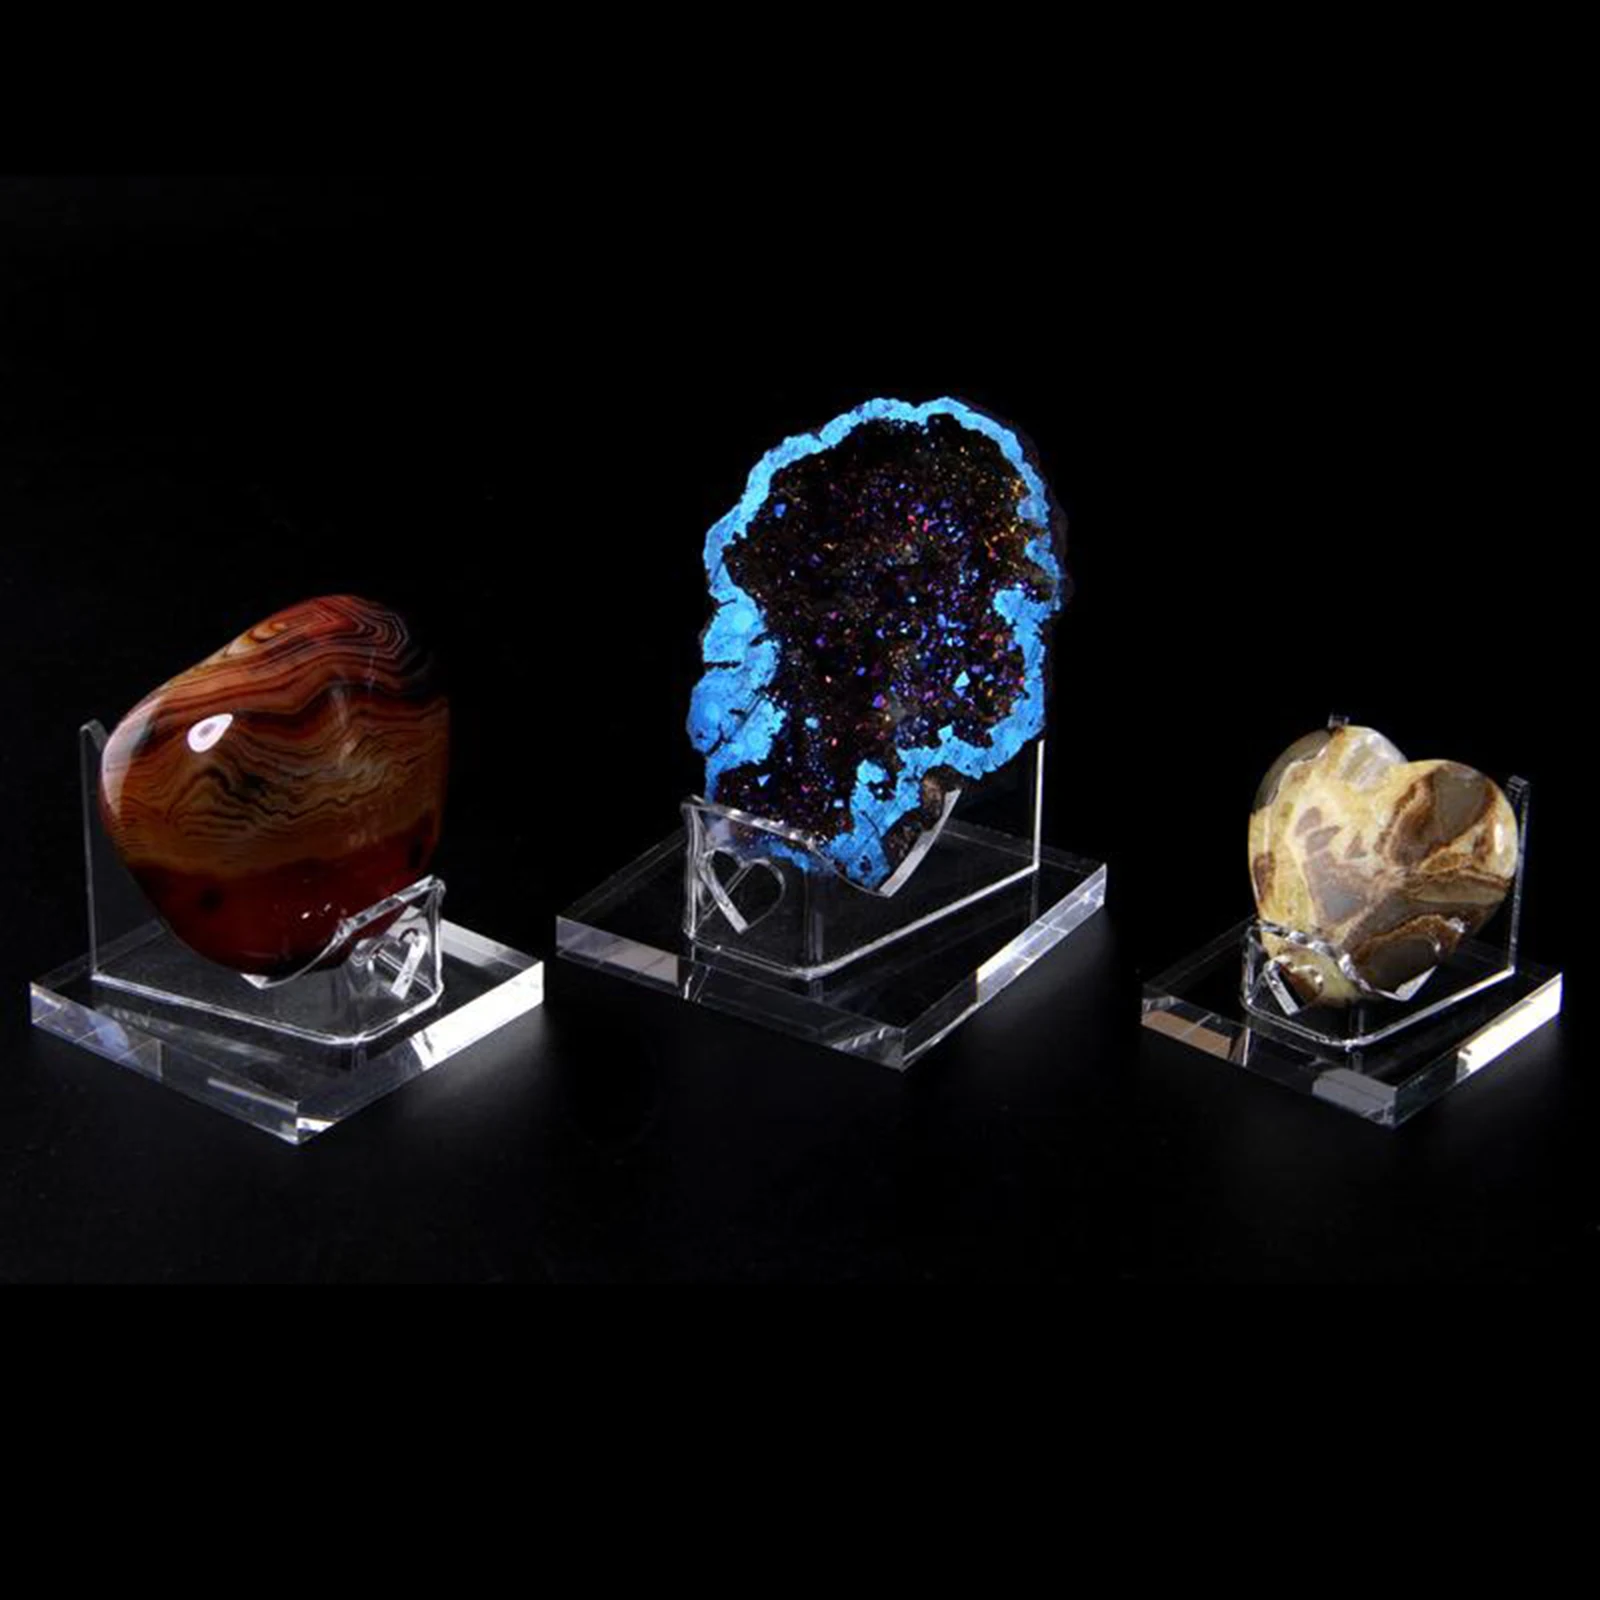 Details about   Acrylic Display Stand Crystal Holder Mineral Specimens Rocks Holder 